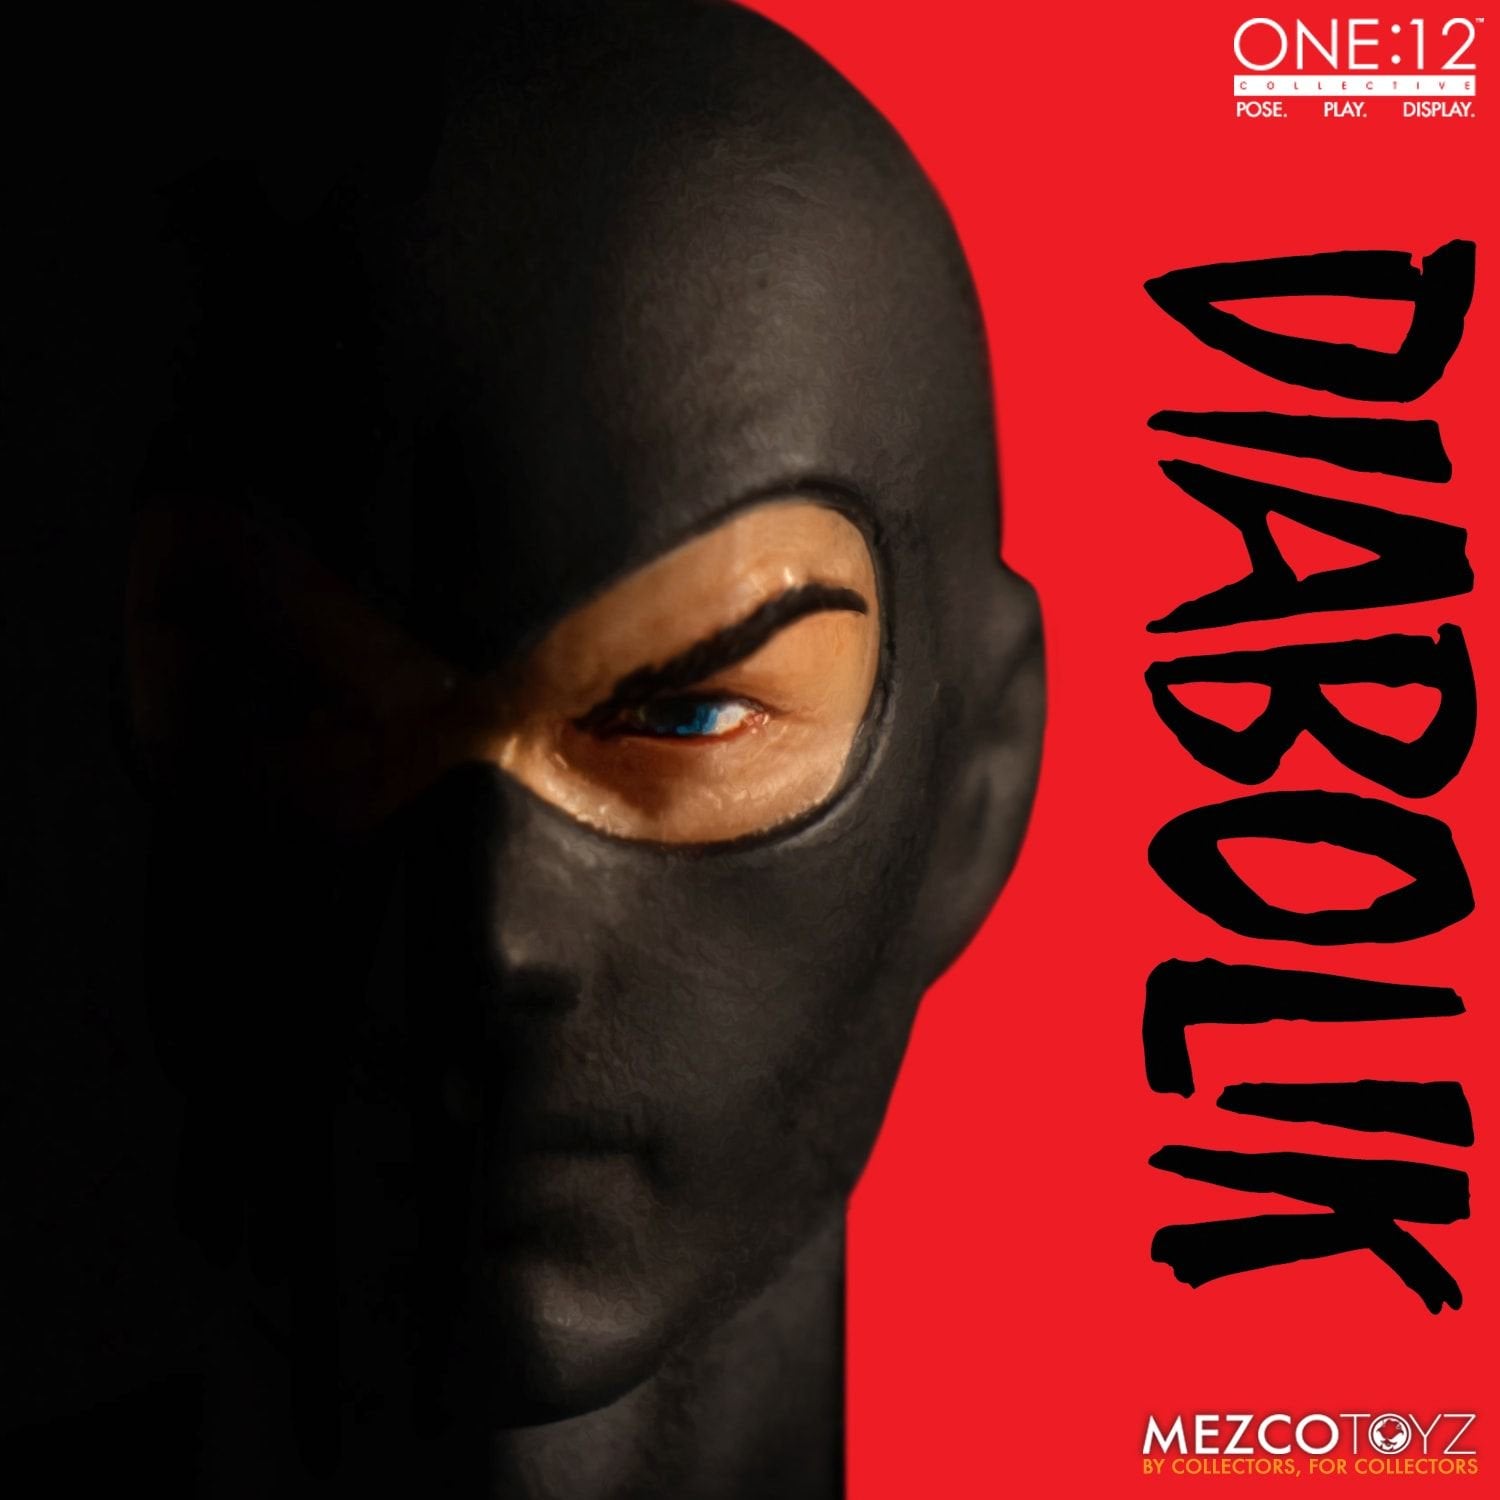 Mezco - One:12 Collective - Diabolik - Marvelous Toys